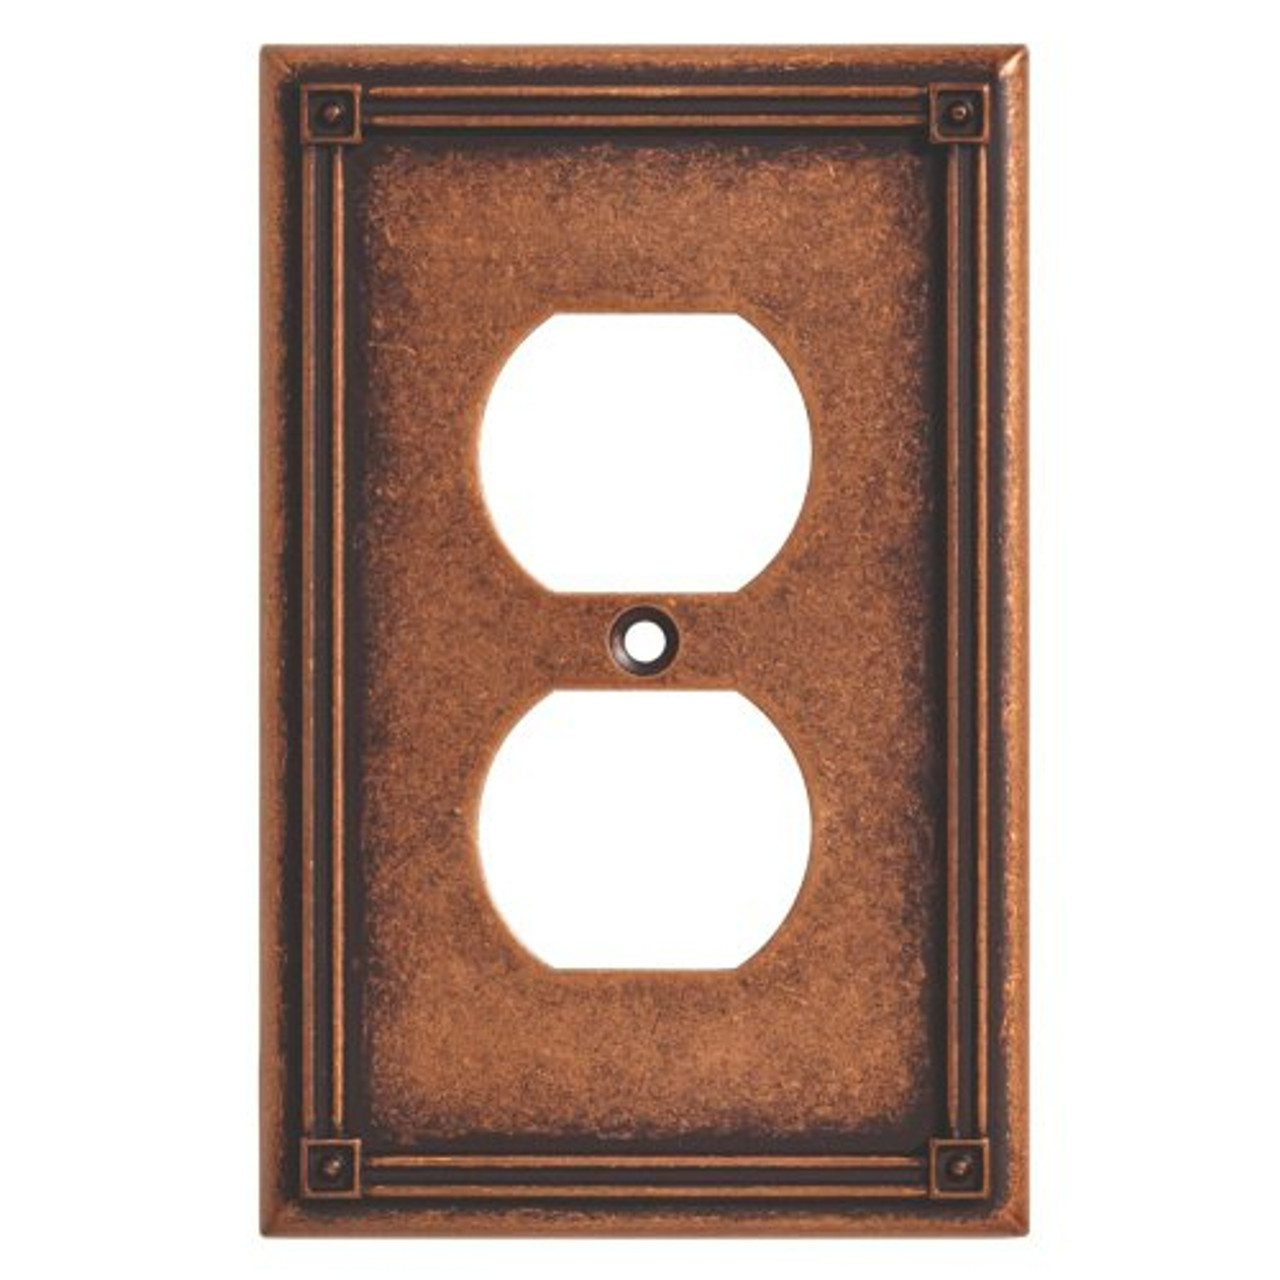 135766 Ruston Sponged Copper Single Duplex Switch Cover Plate